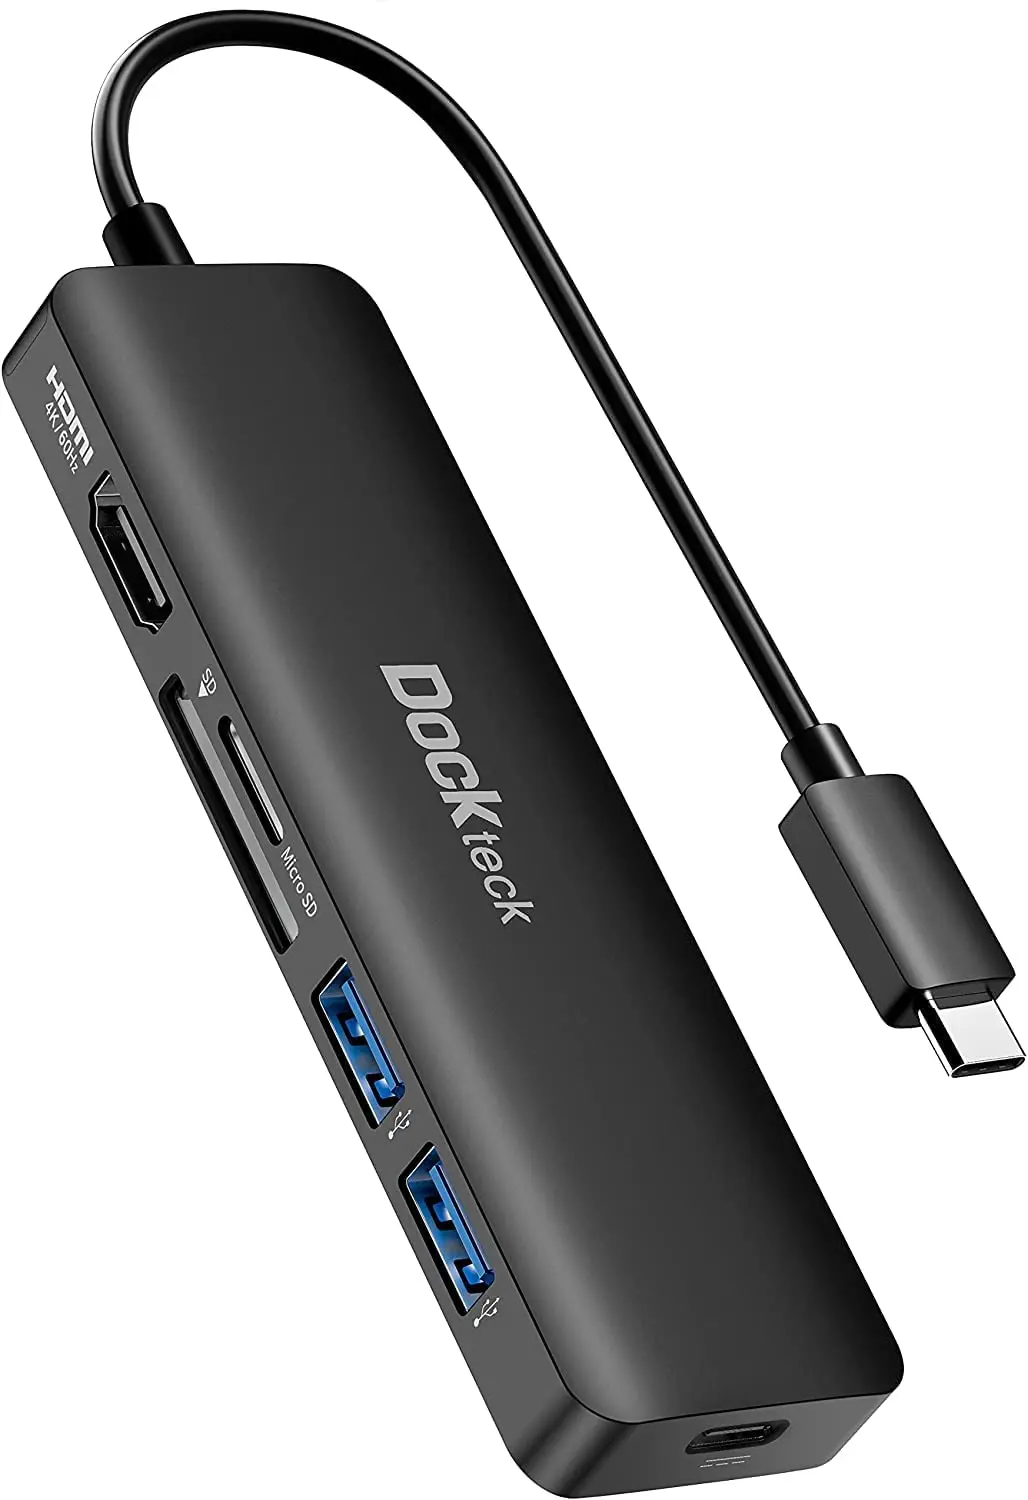 

USB C Hub, 6-in-1 Type C Hub with 4K 60Hz HDMI, 100W PD, SD & microSD Card Reader, 2 USB 3.0 Data 5Gbps, Dockteck USB-C Adapter